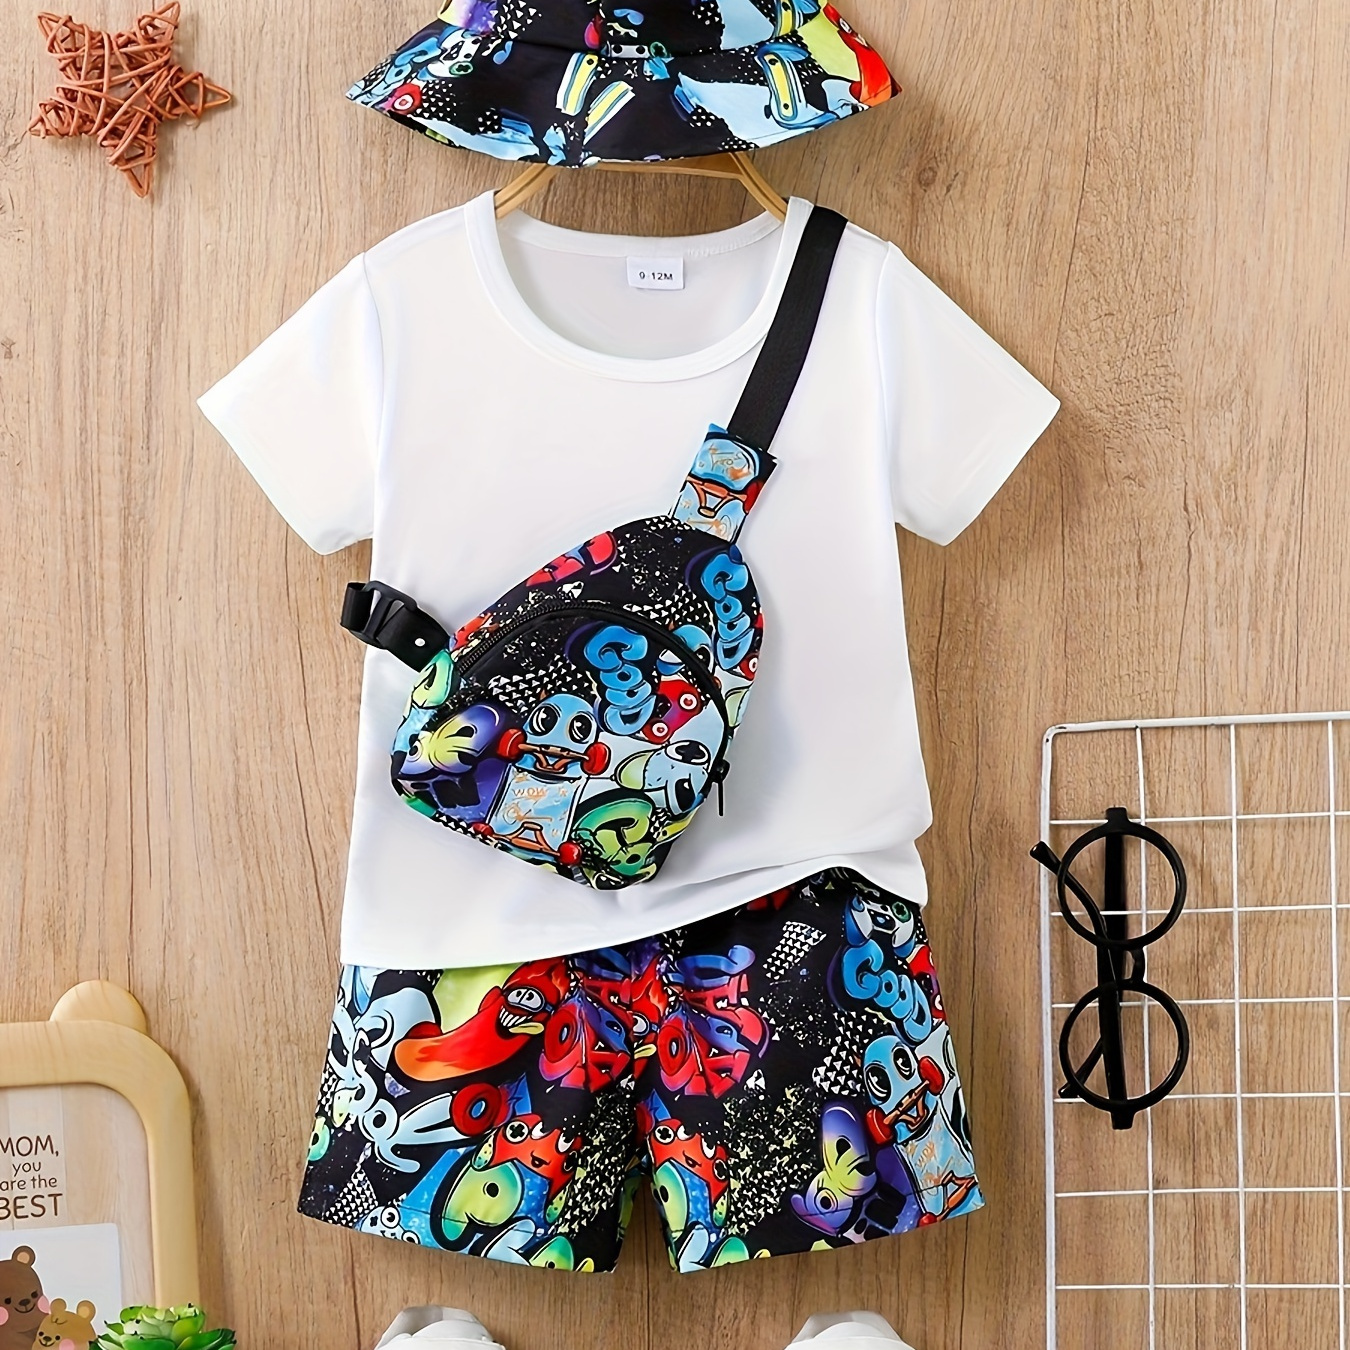 

4-piece Baby Boy's Trendy Outfit Set, Short Sleeve White T-shirt, Monster Cartoon Print Shorts, Coordinating Hat & Crossbody Bag